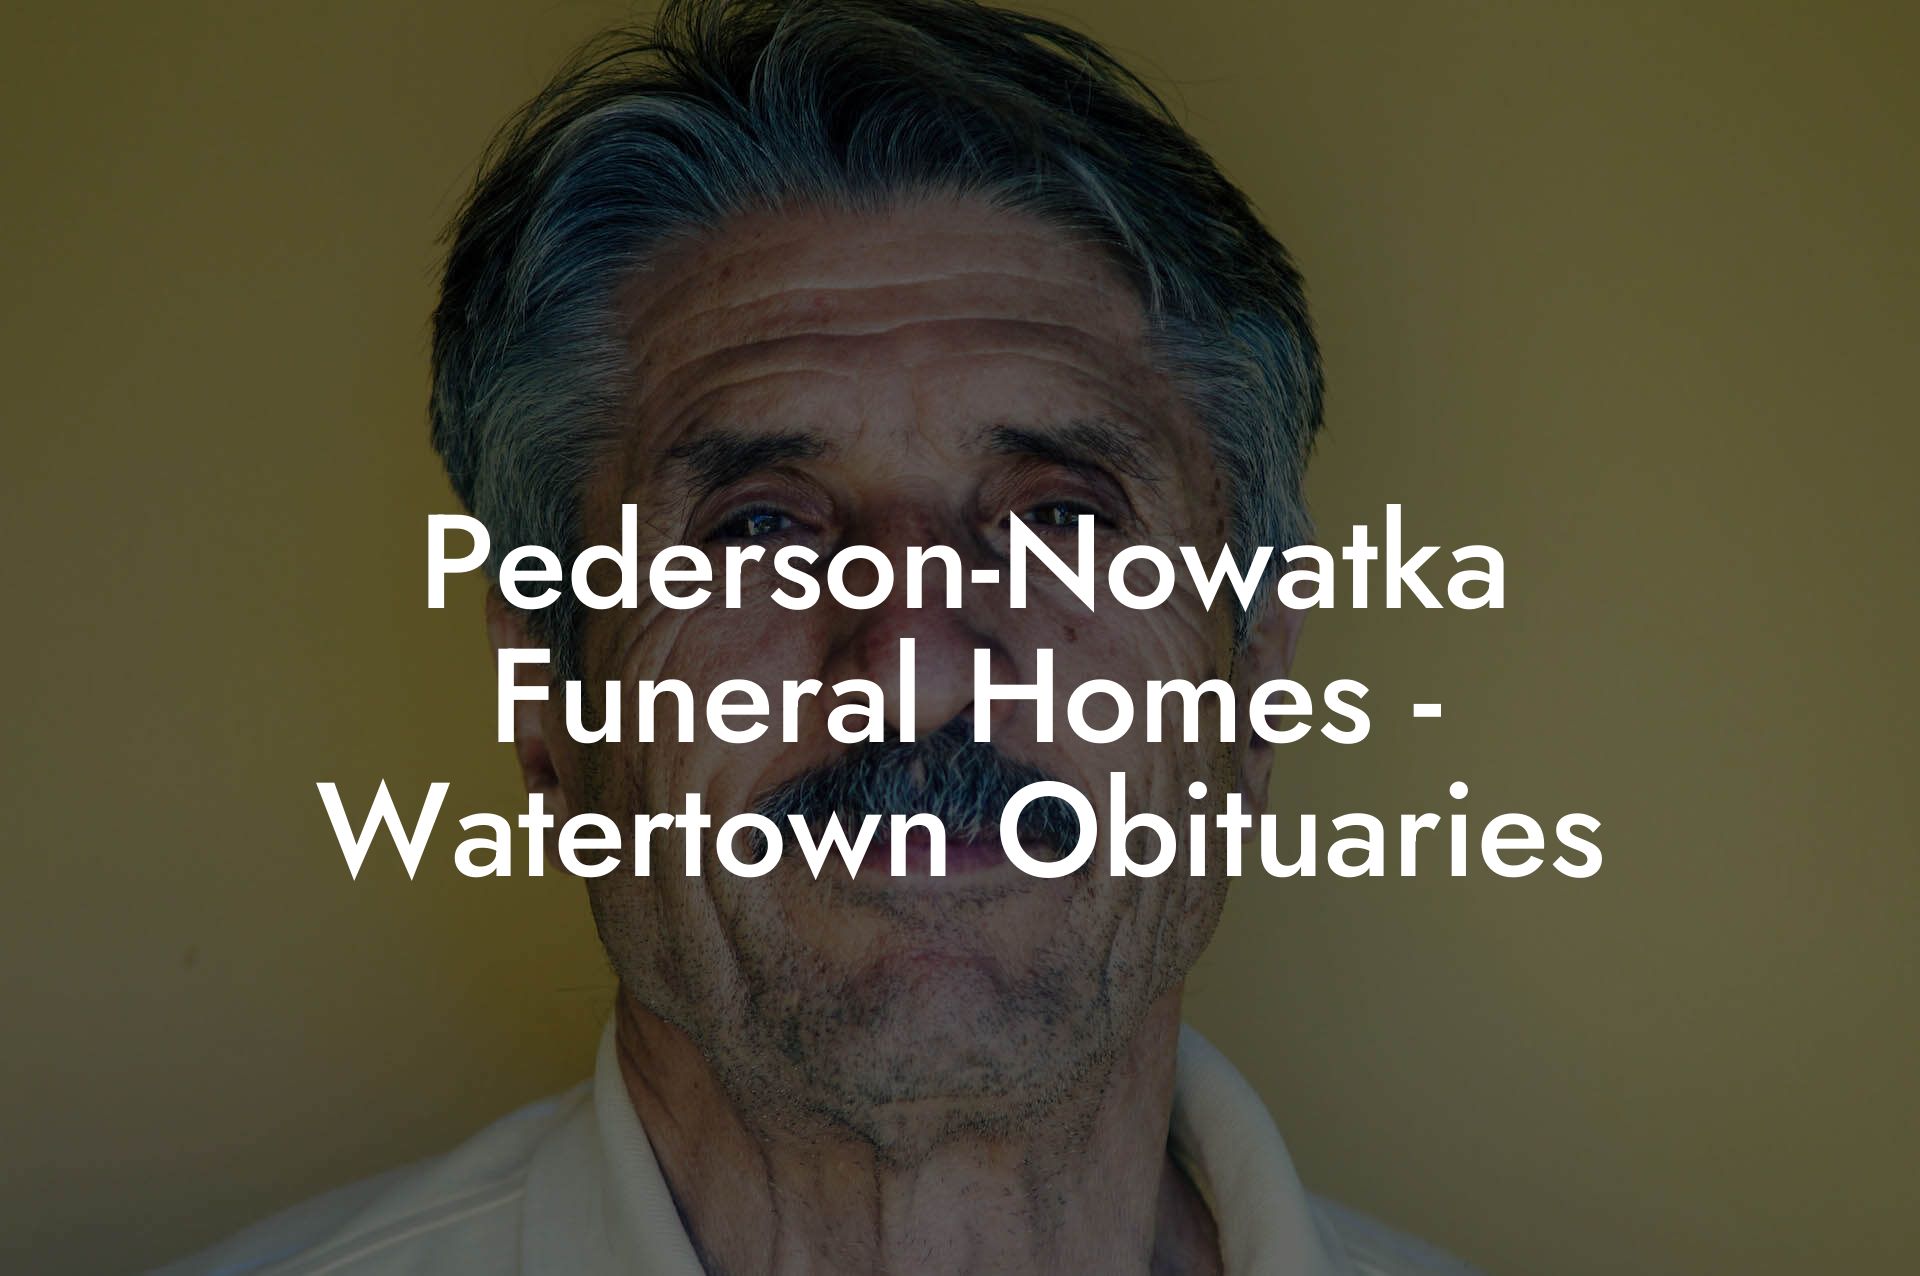 Pederson-Nowatka Funeral Homes - Watertown Obituaries